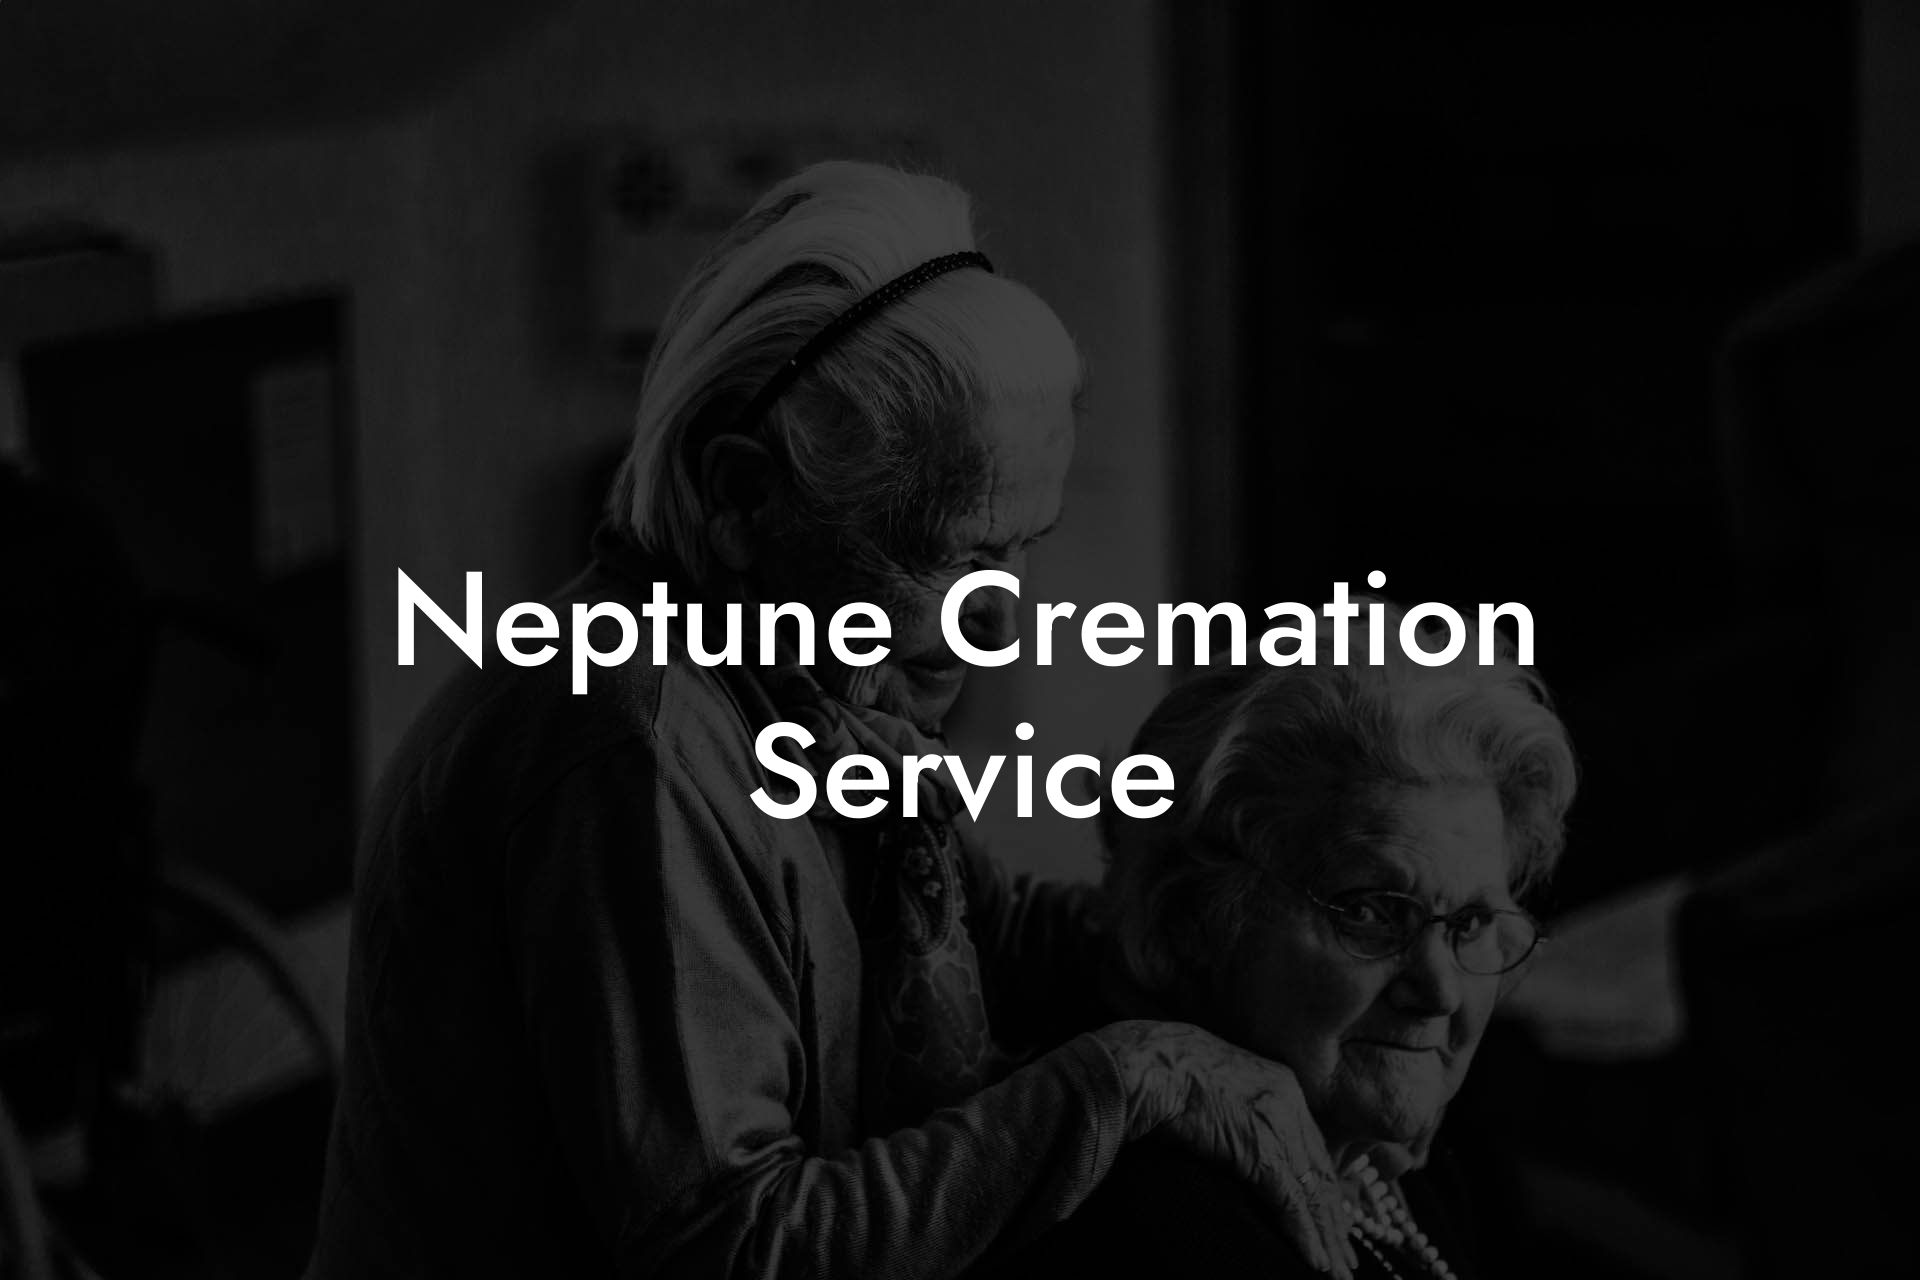 Neptune Cremation Service